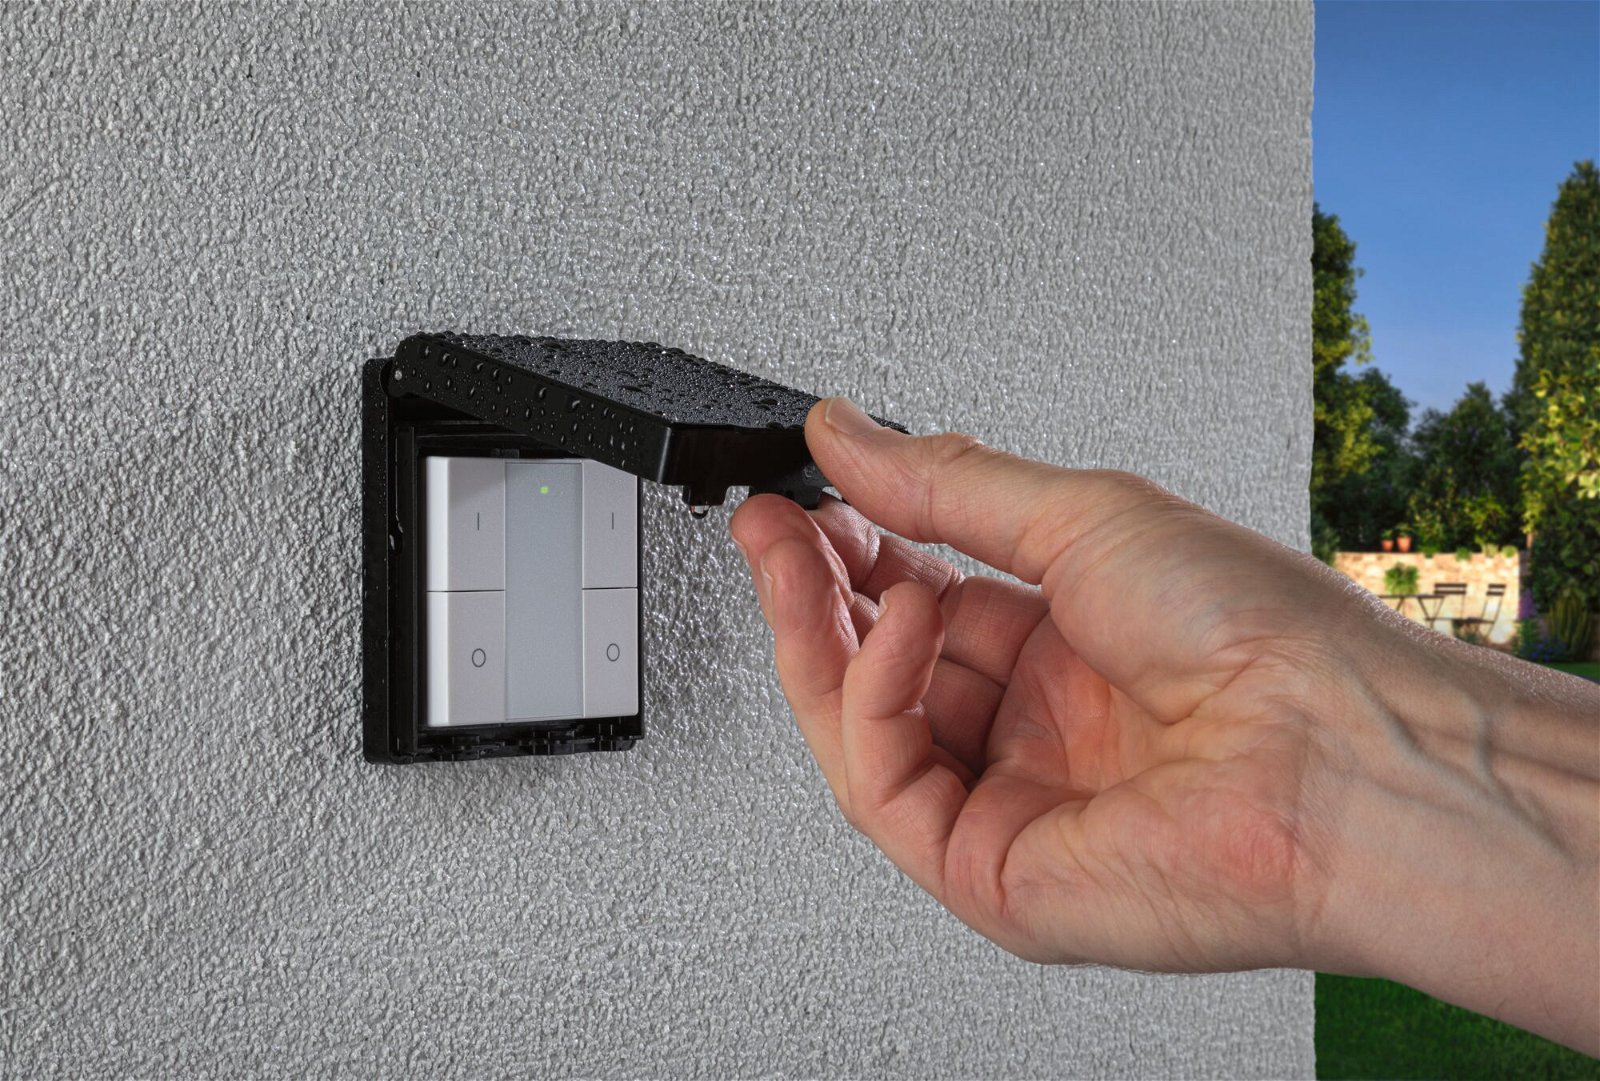 Wall switch Smart Home Zigbee On/Off/Dimm Outdoor Black